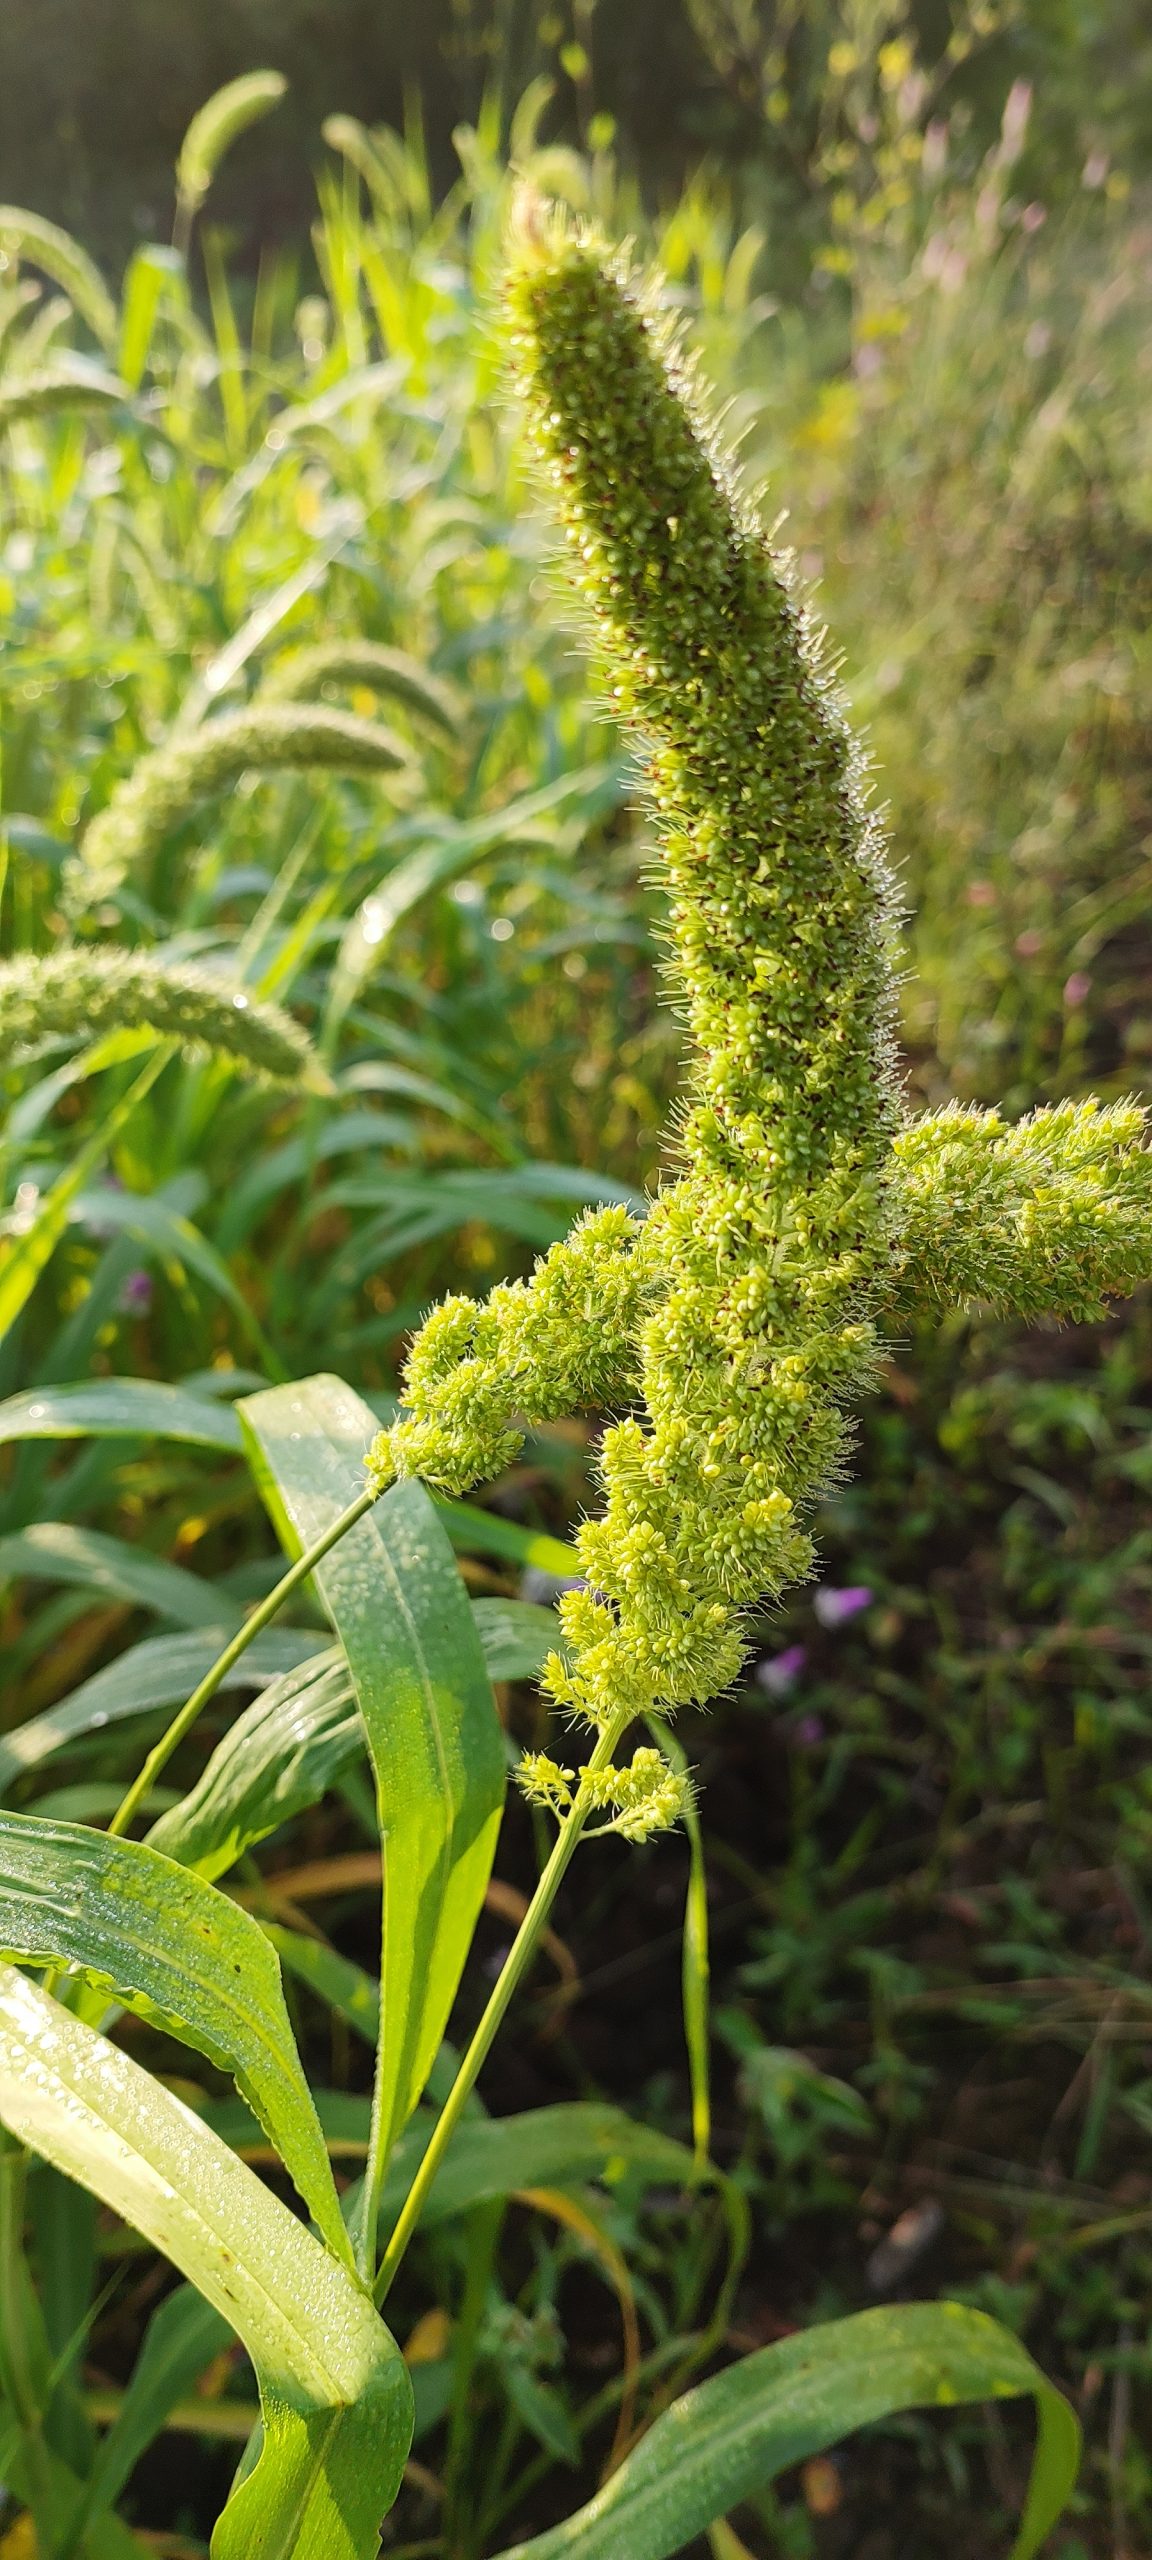 Millet plant